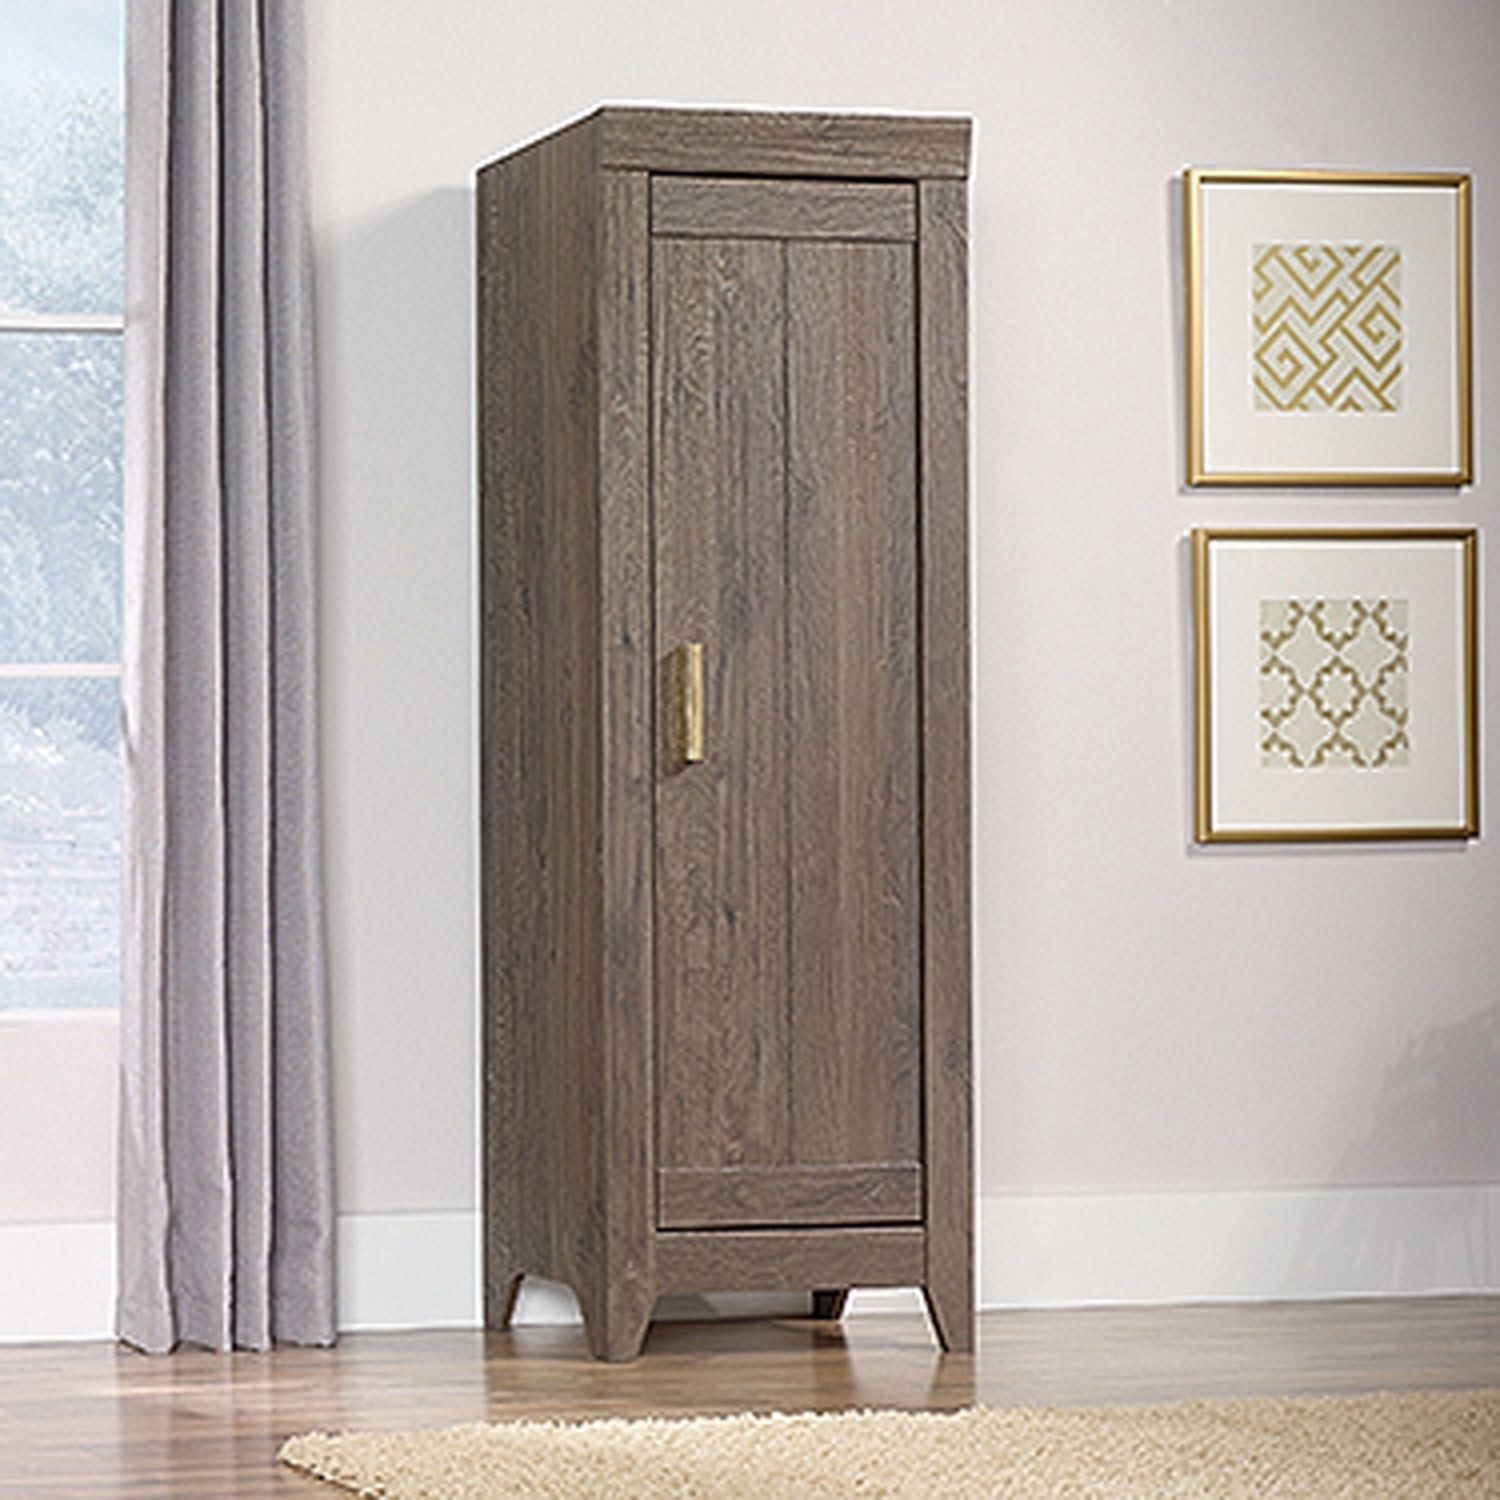 Sauder Adept Engineered Wood Narrow Storage Cabinet, 3 Adjustable Shelves,  Craftsman Oak